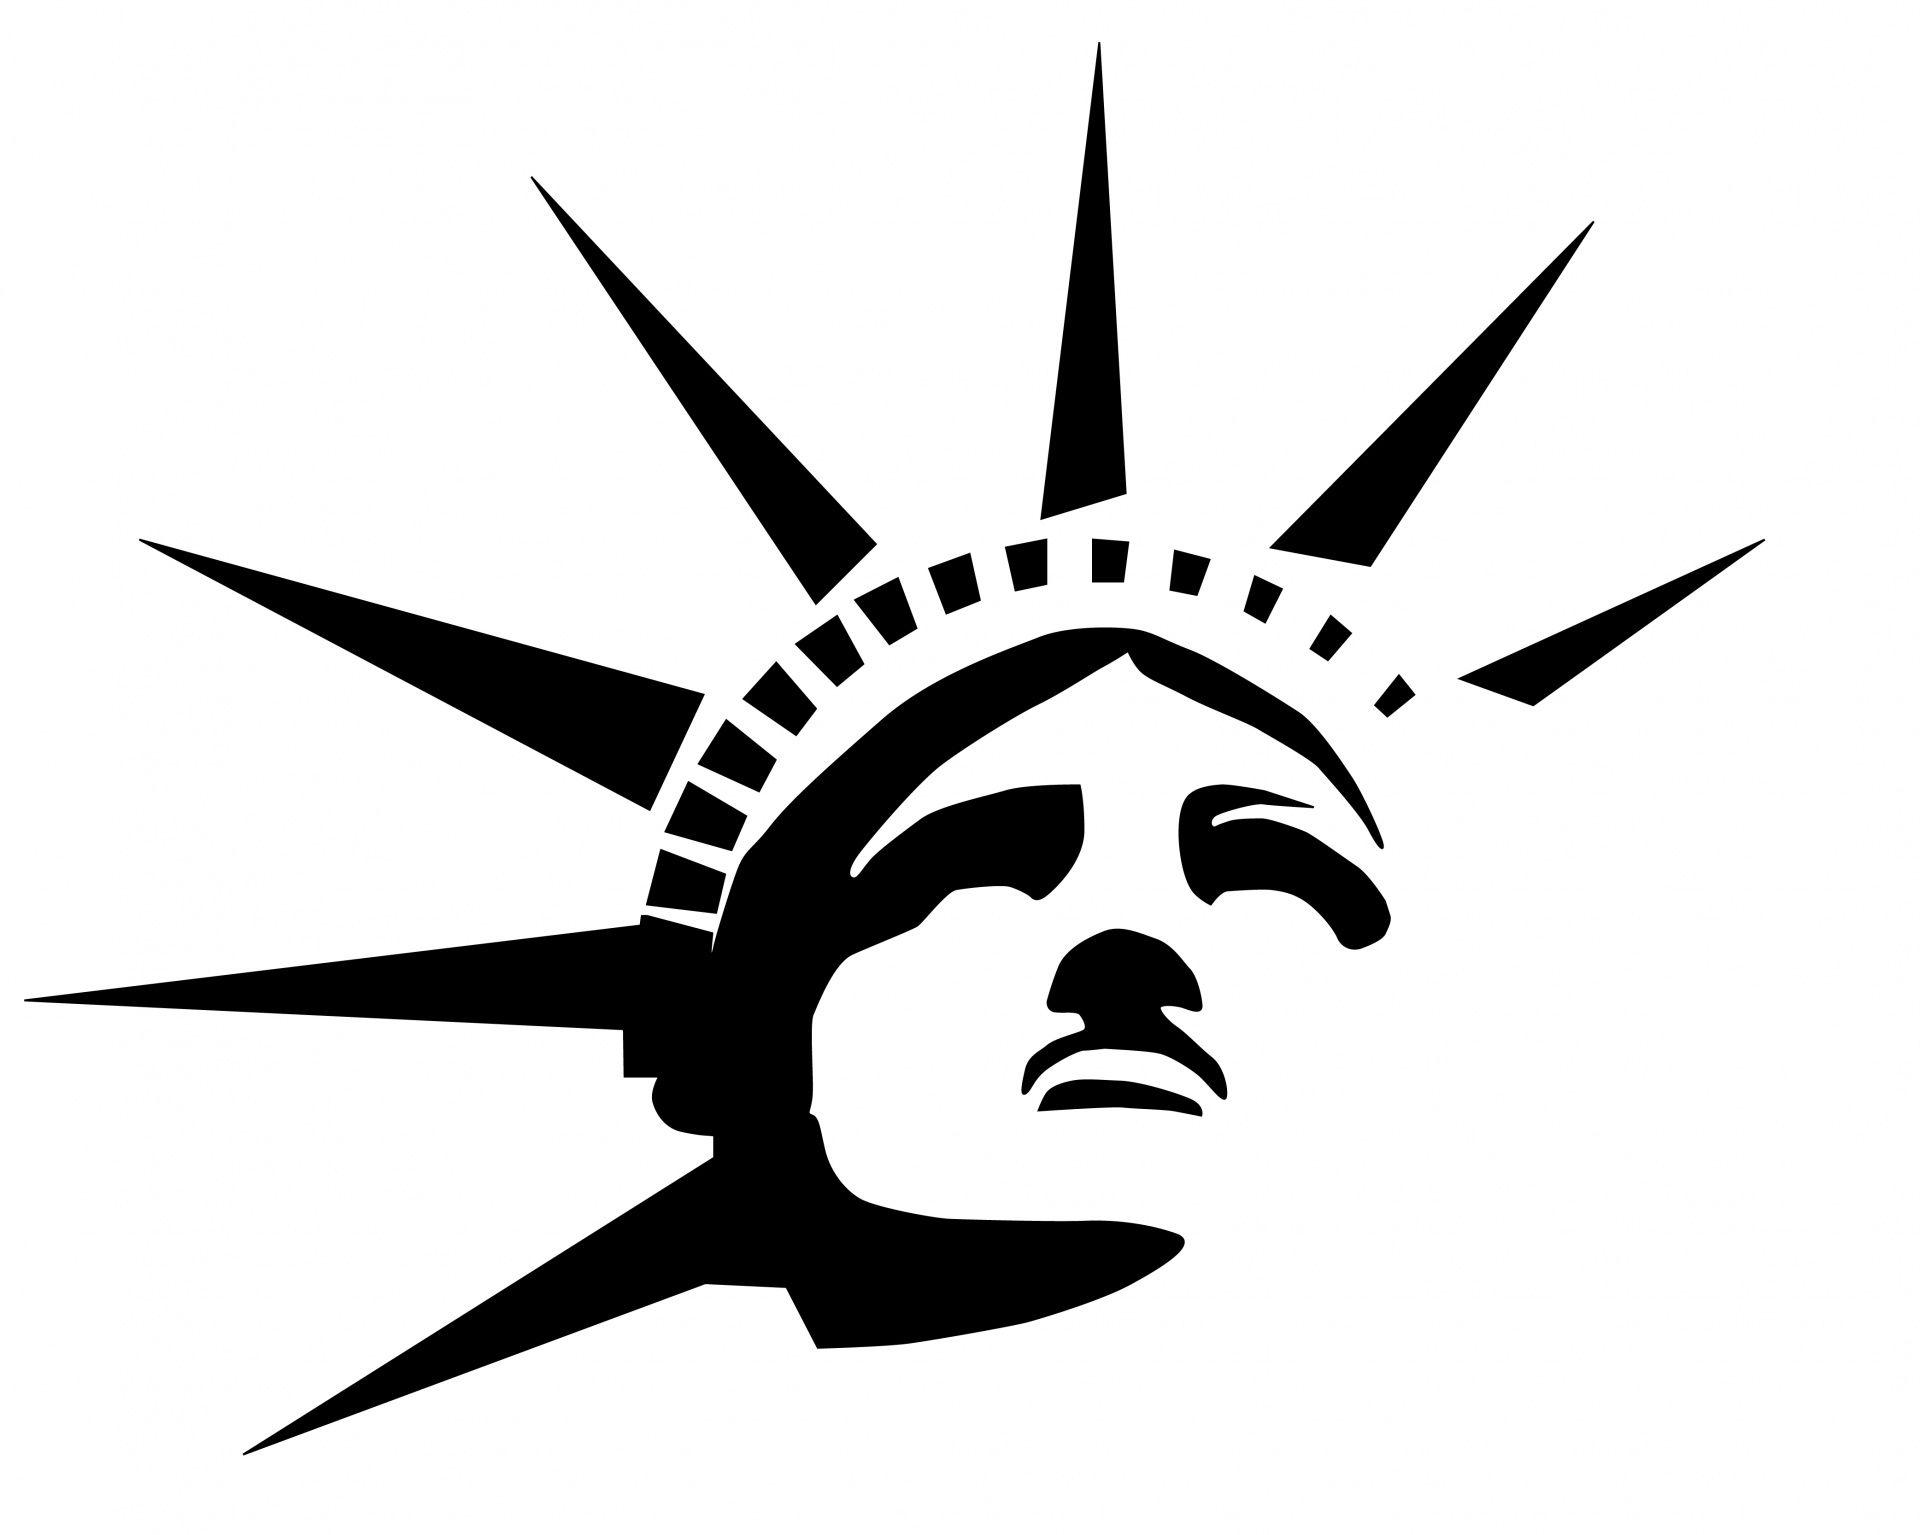 Manifestation Logo - Vaping: A Modern Manifestation of Liberty